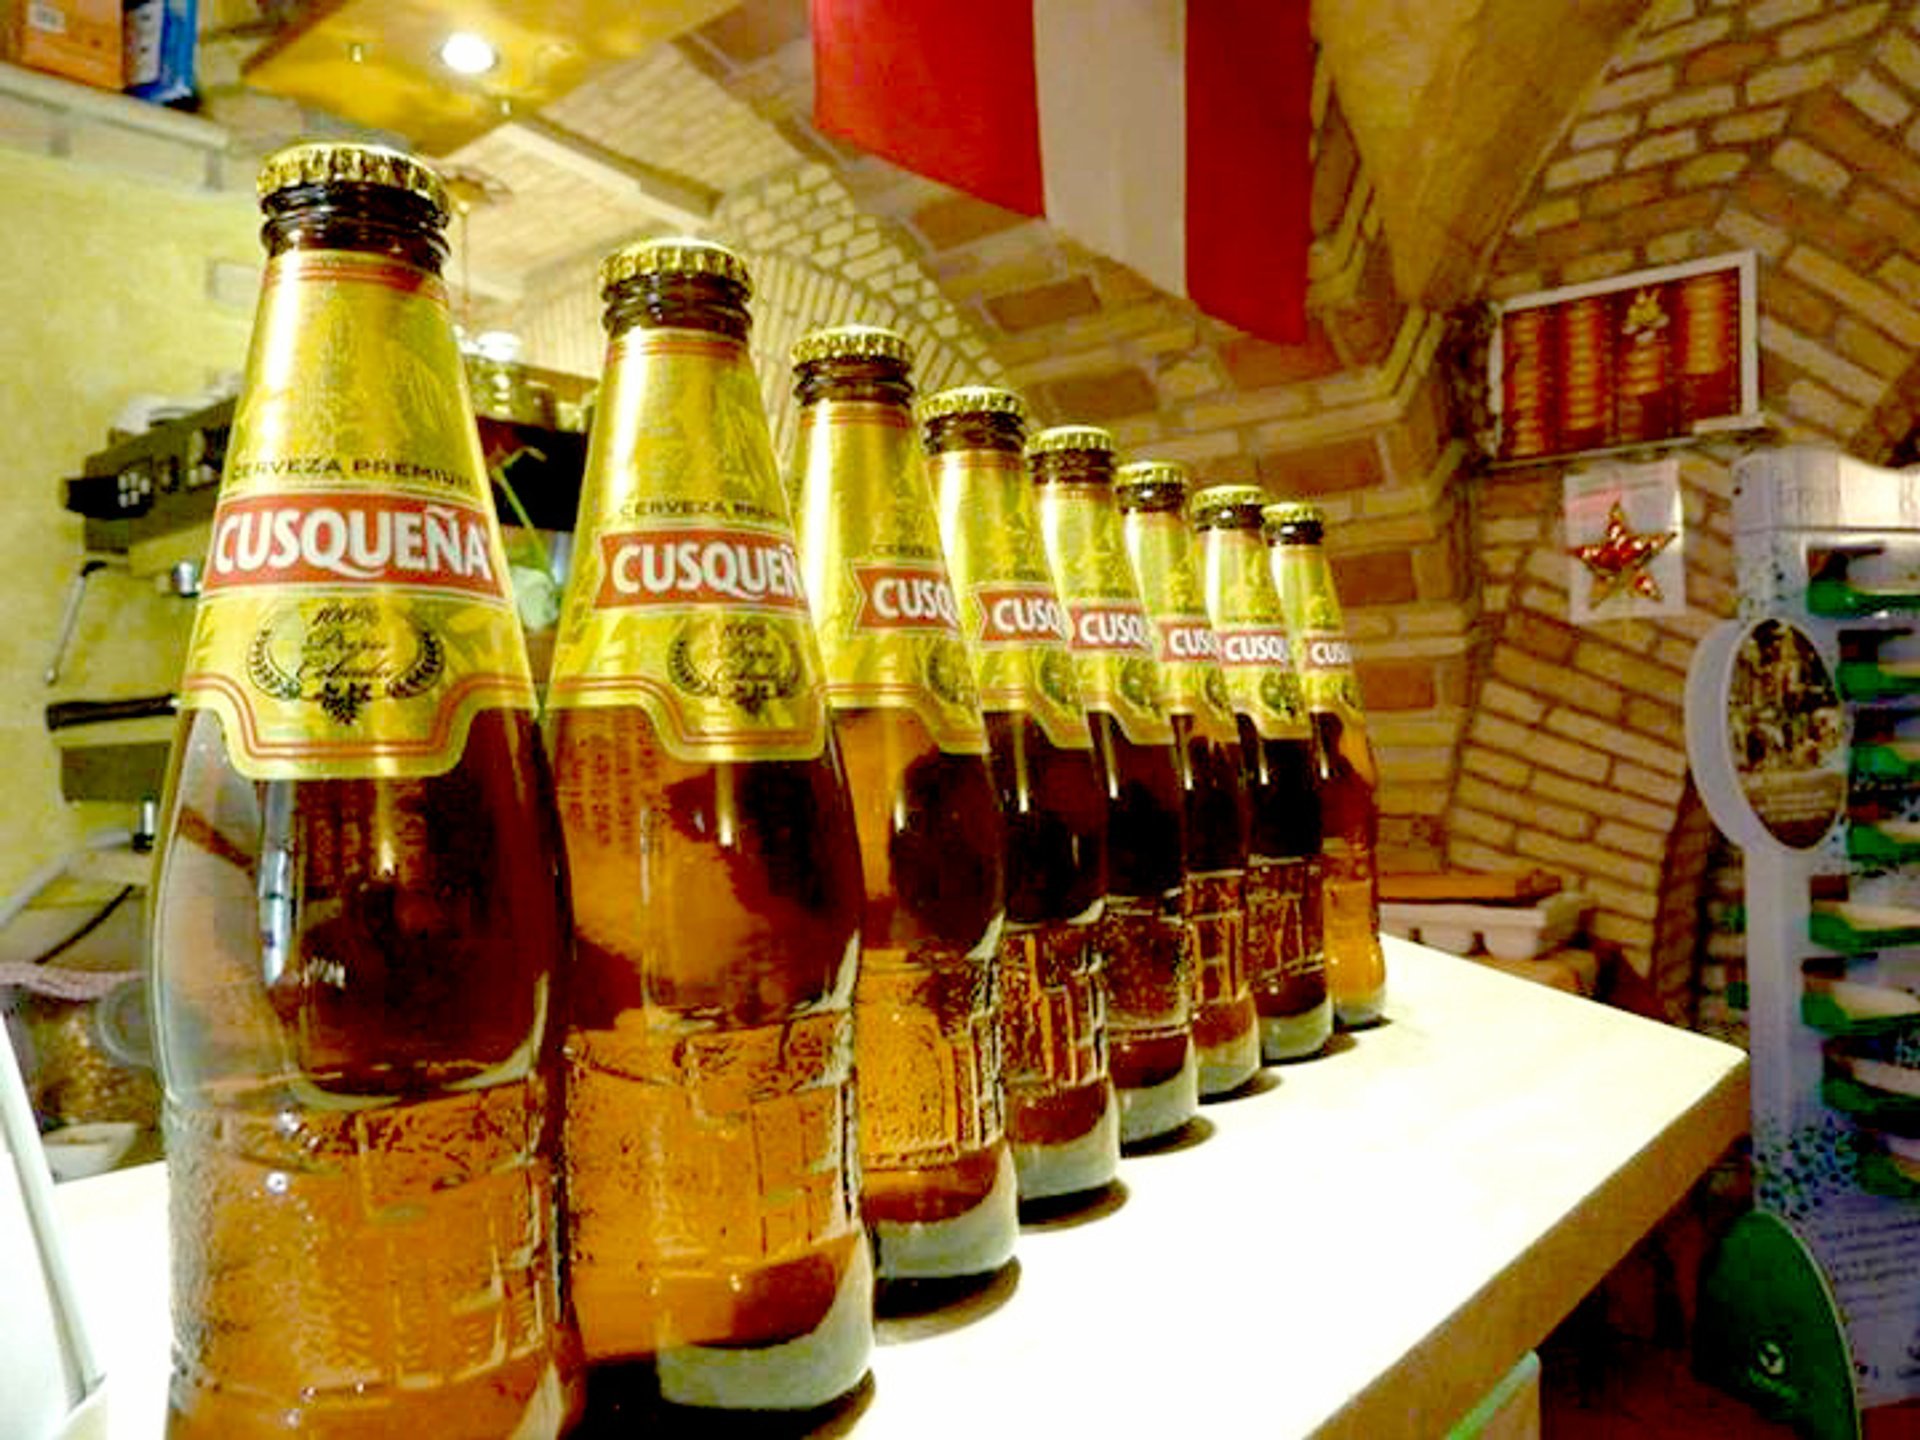 Festival de la bière Cusqueña